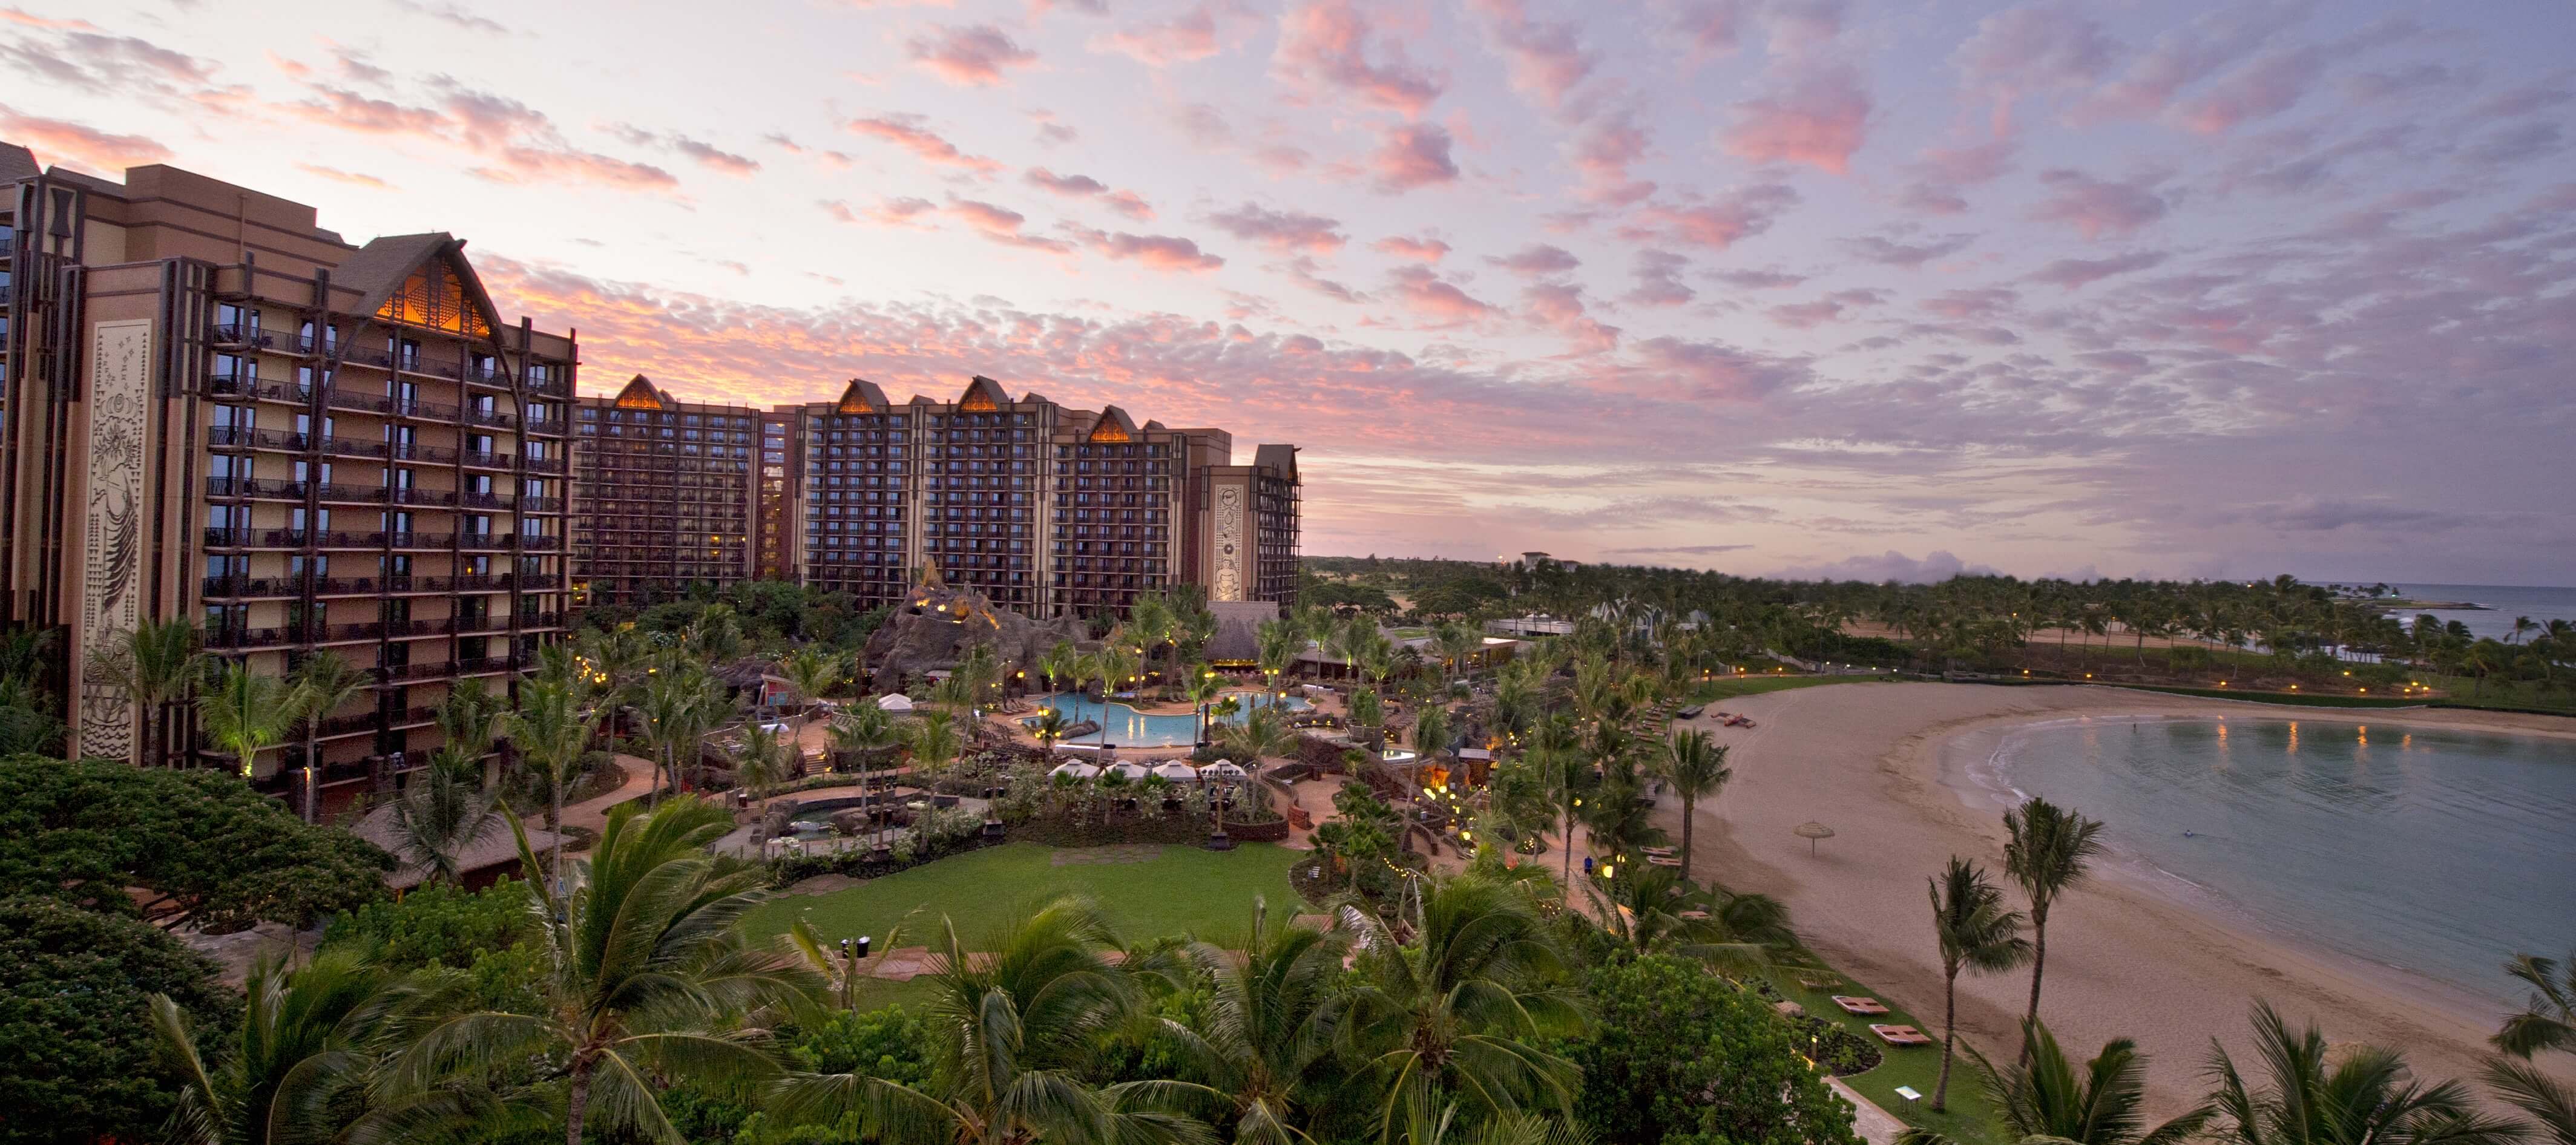 A Touch of Disney Magic - Aulani Resort & Spa, Hawaii - Covington Travel